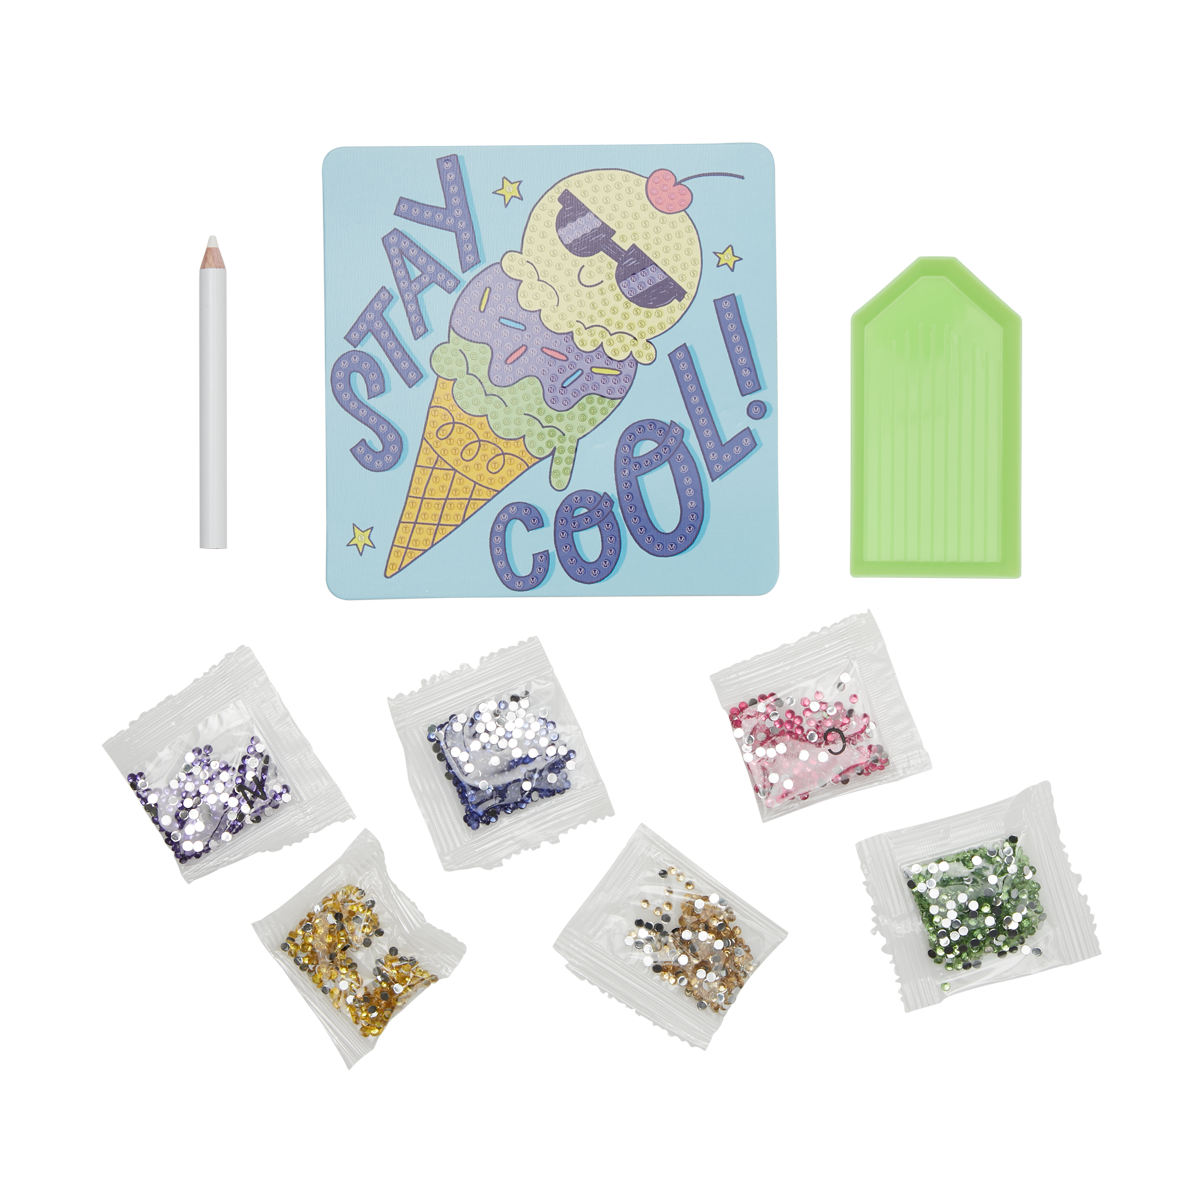 OOLY view of Razzle Dazzle DIY Gem Art Kit - Cool Cream contents